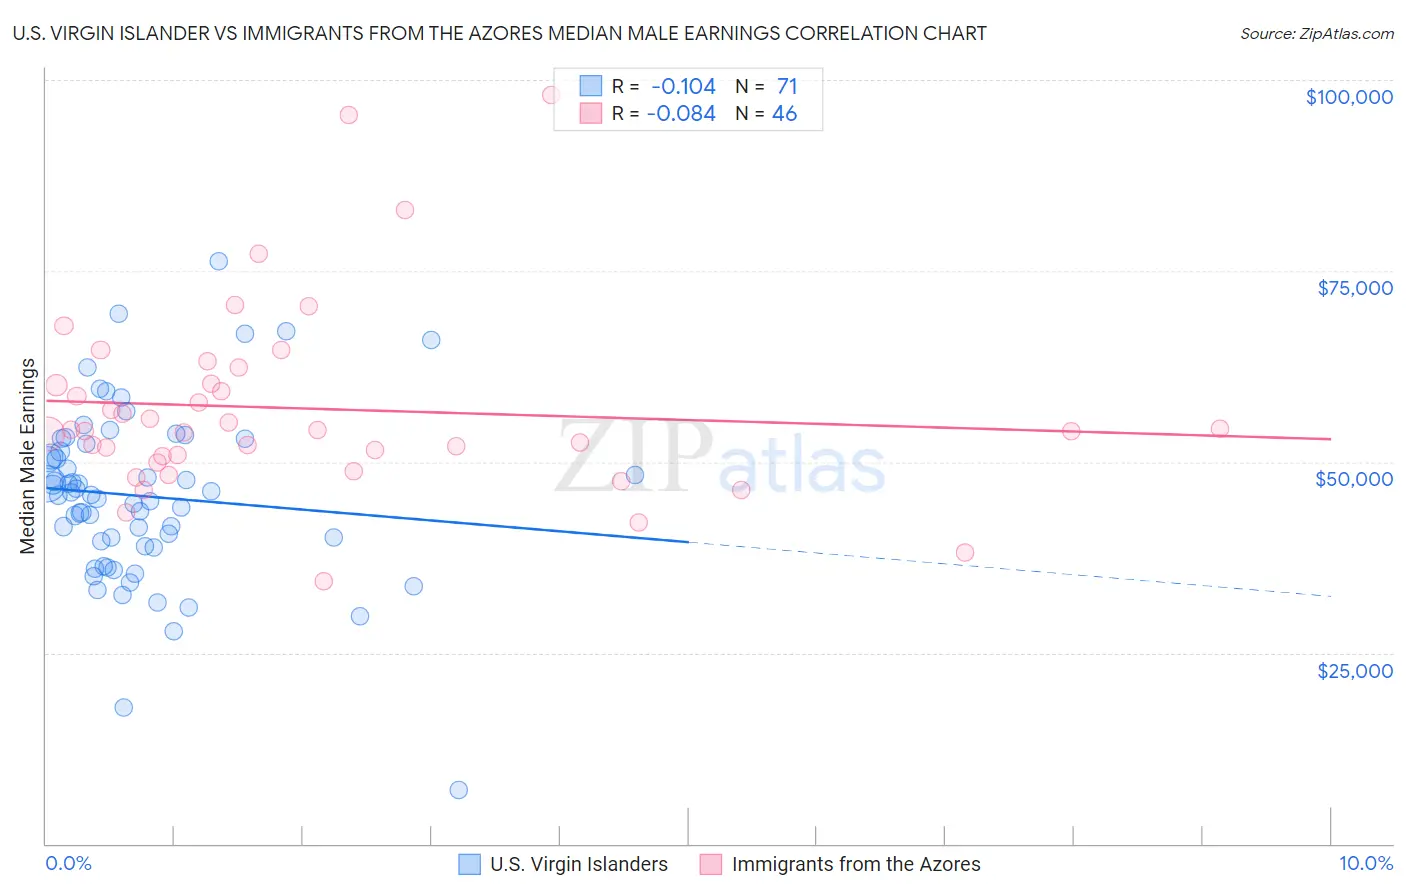 U.S. Virgin Islander vs Immigrants from the Azores Median Male Earnings